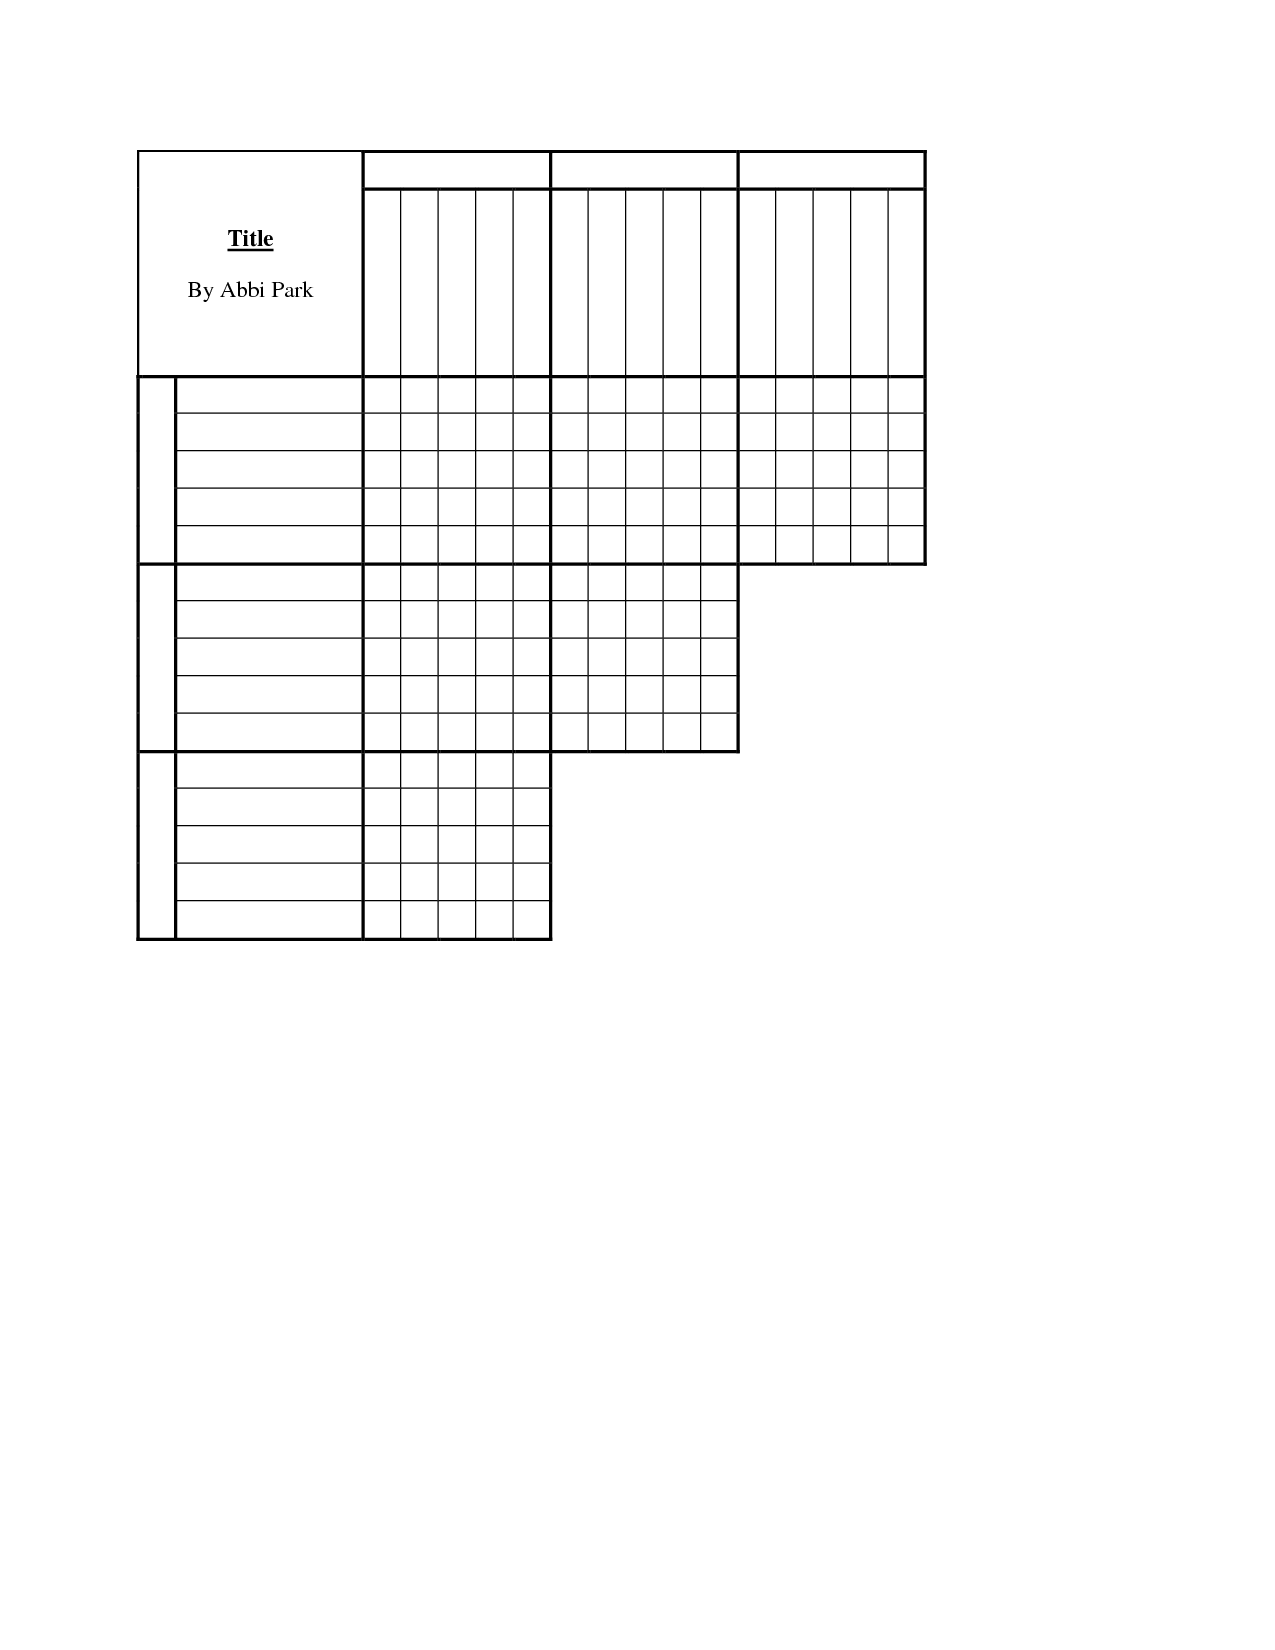 logic-grid-puzzles-by-logiclike